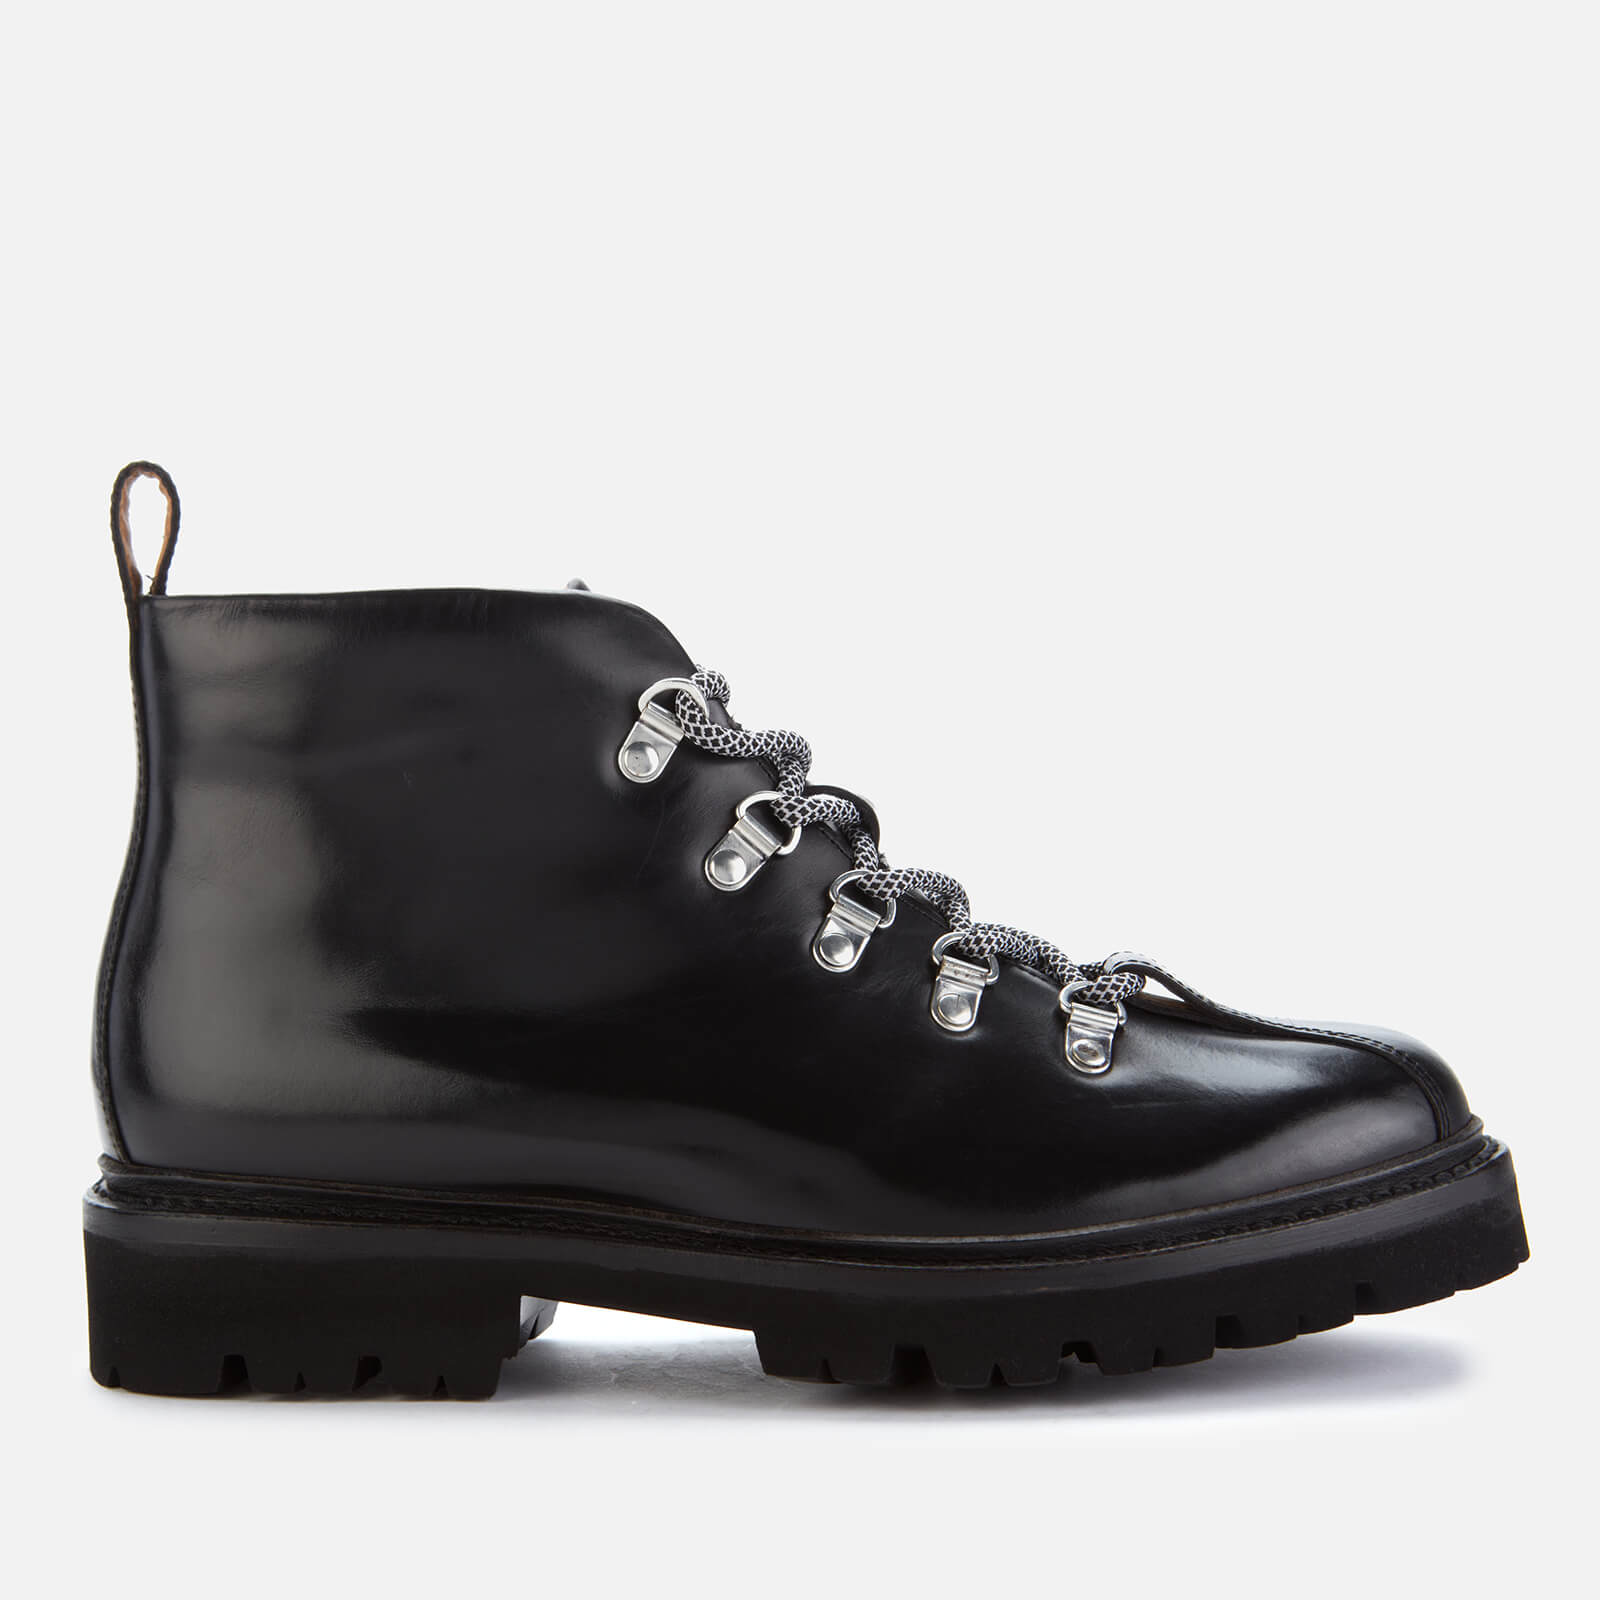 Grenson Women’s Bridget Leather Hiking Style Boots - Black